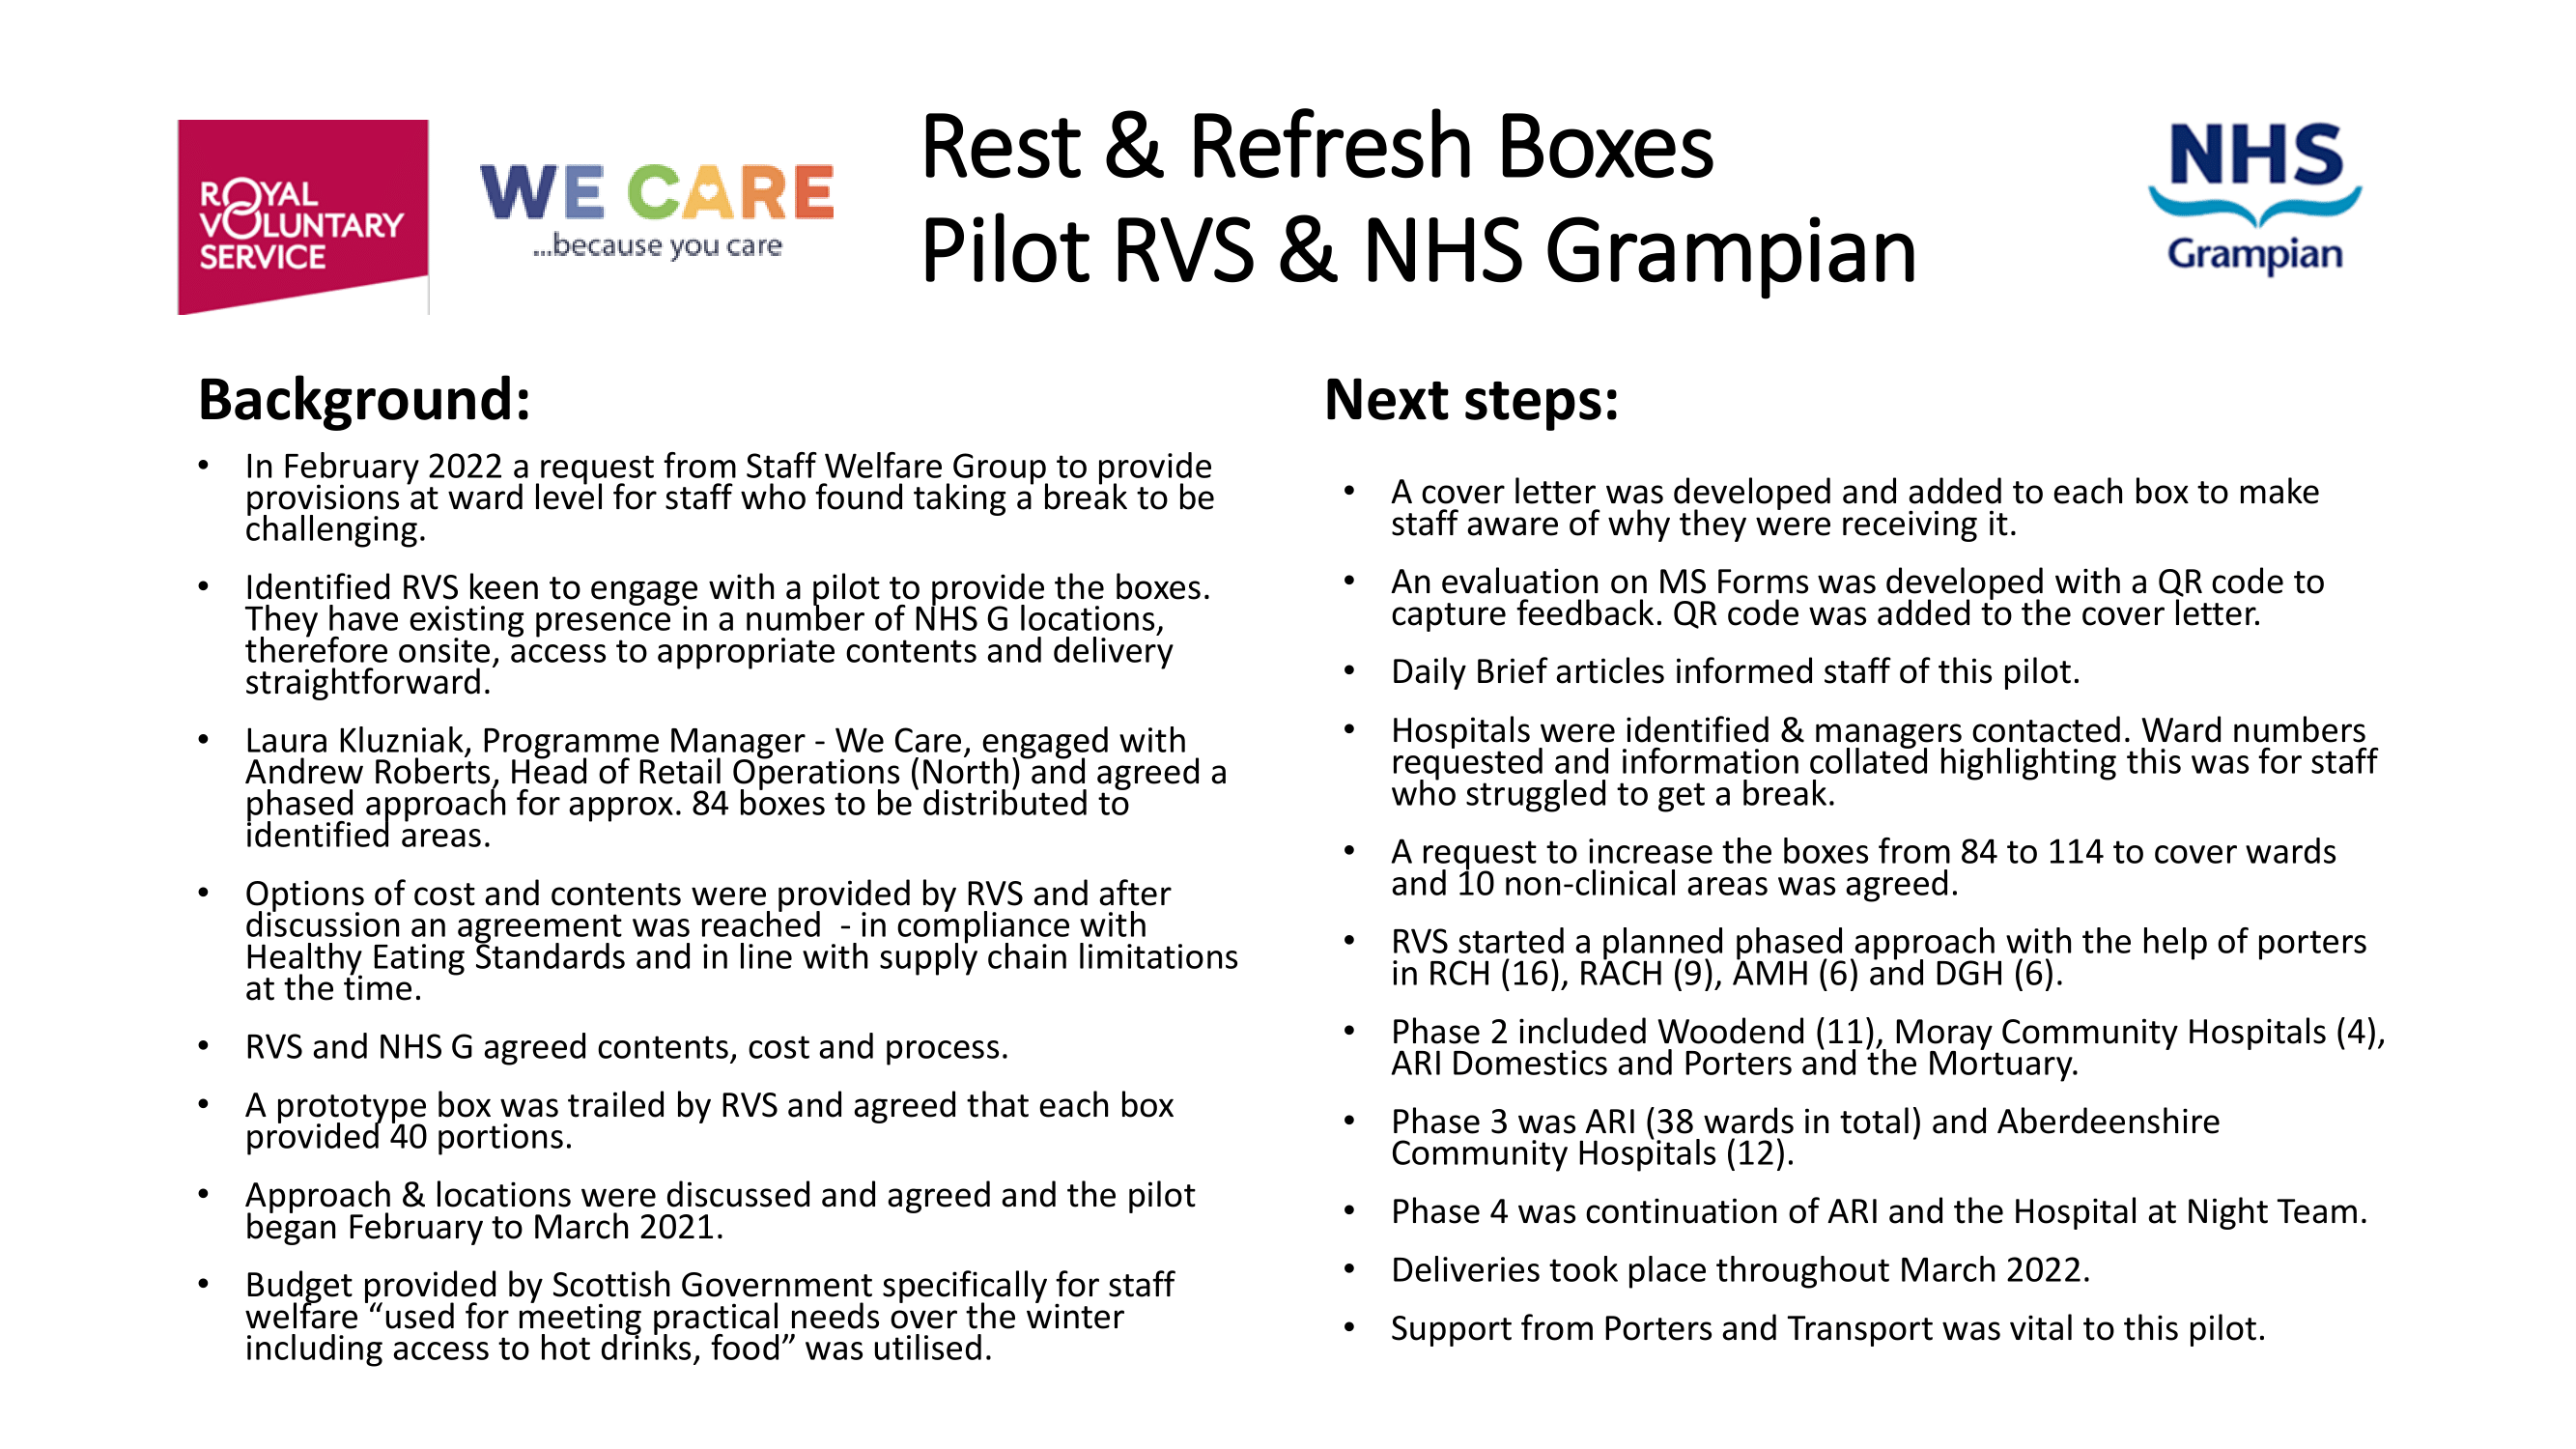 Rest & Refresh Box Pilot Review 1